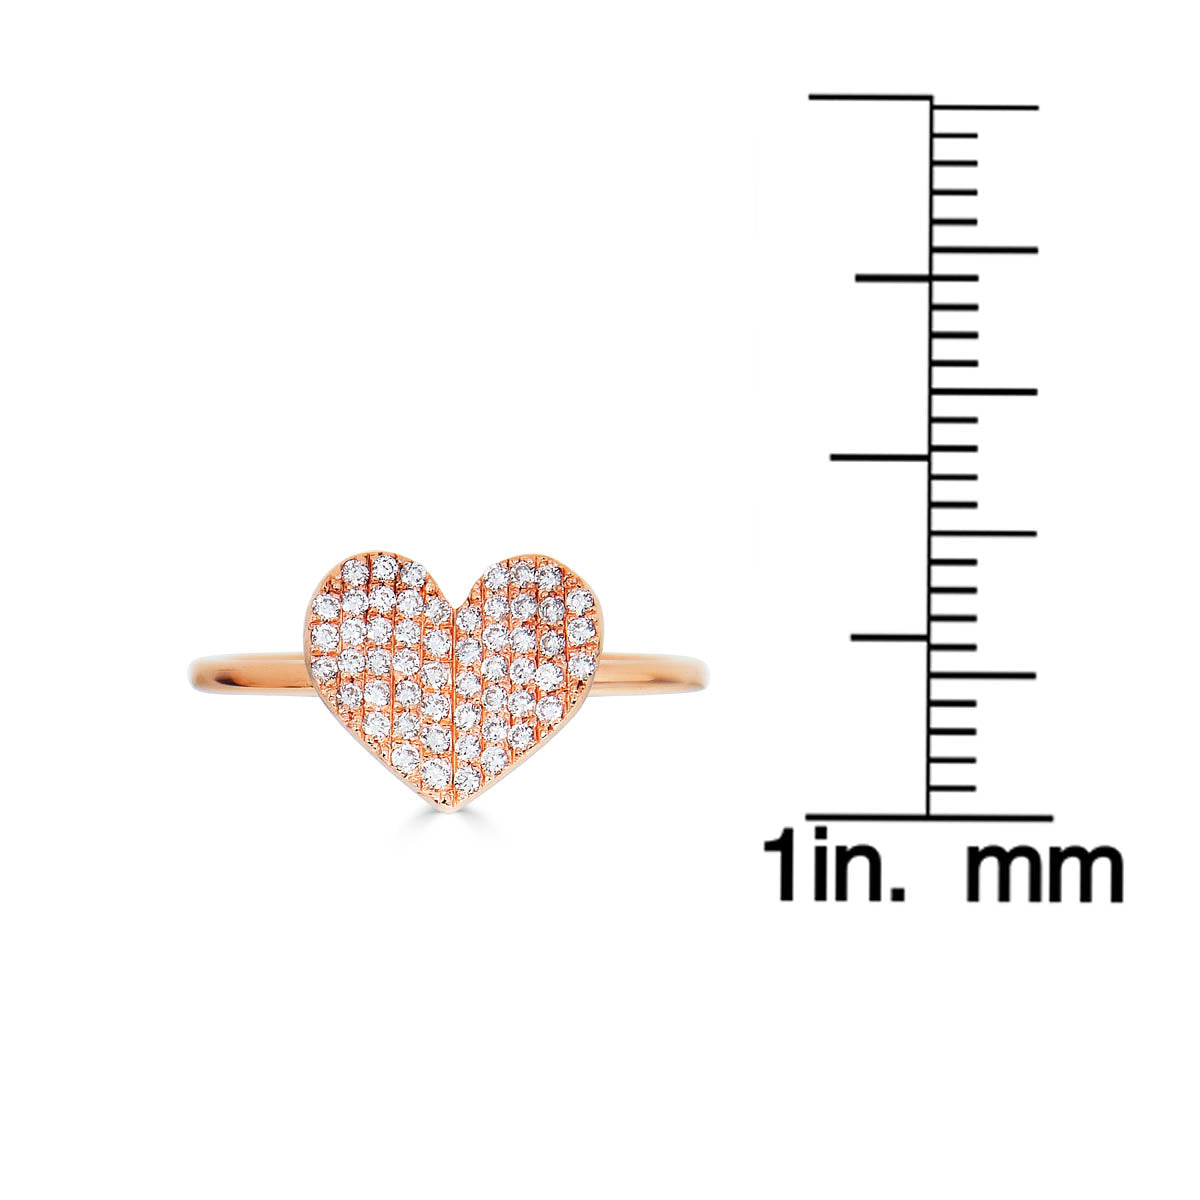 large white diamond folded heart ring with ruler